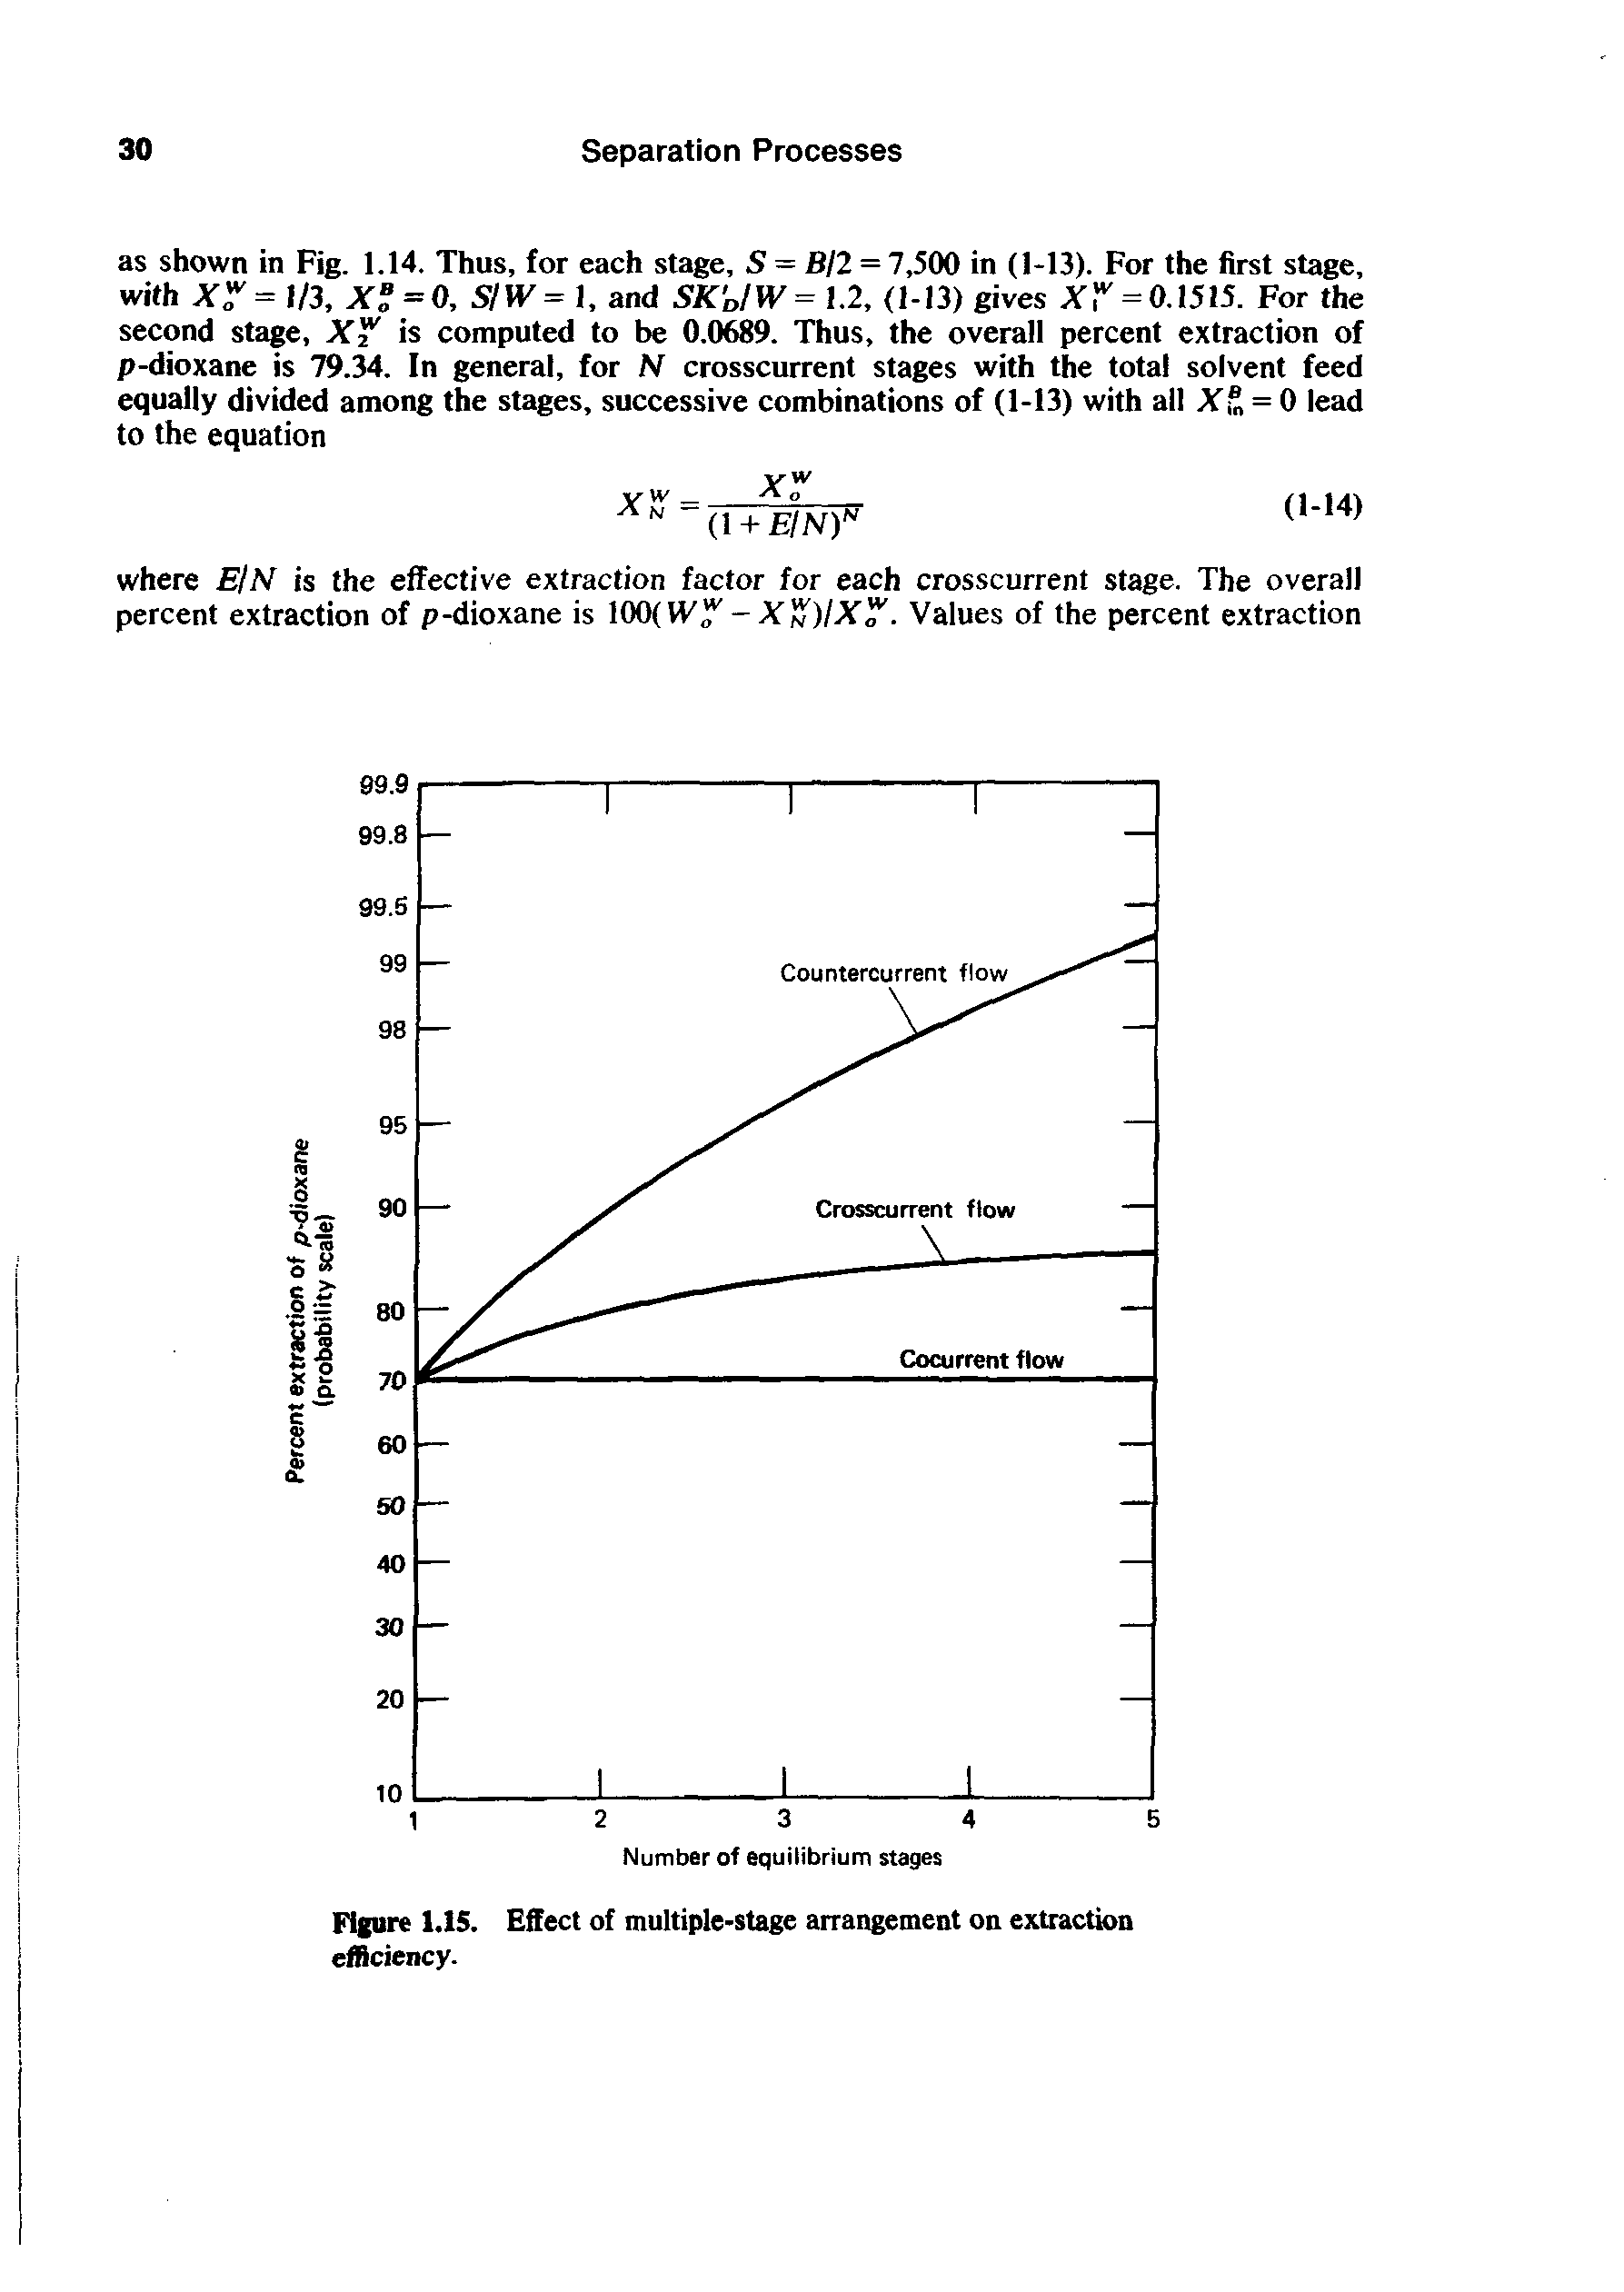 Figure 1.15. Effect of multiple-stage arrangement on extraction efficiency.